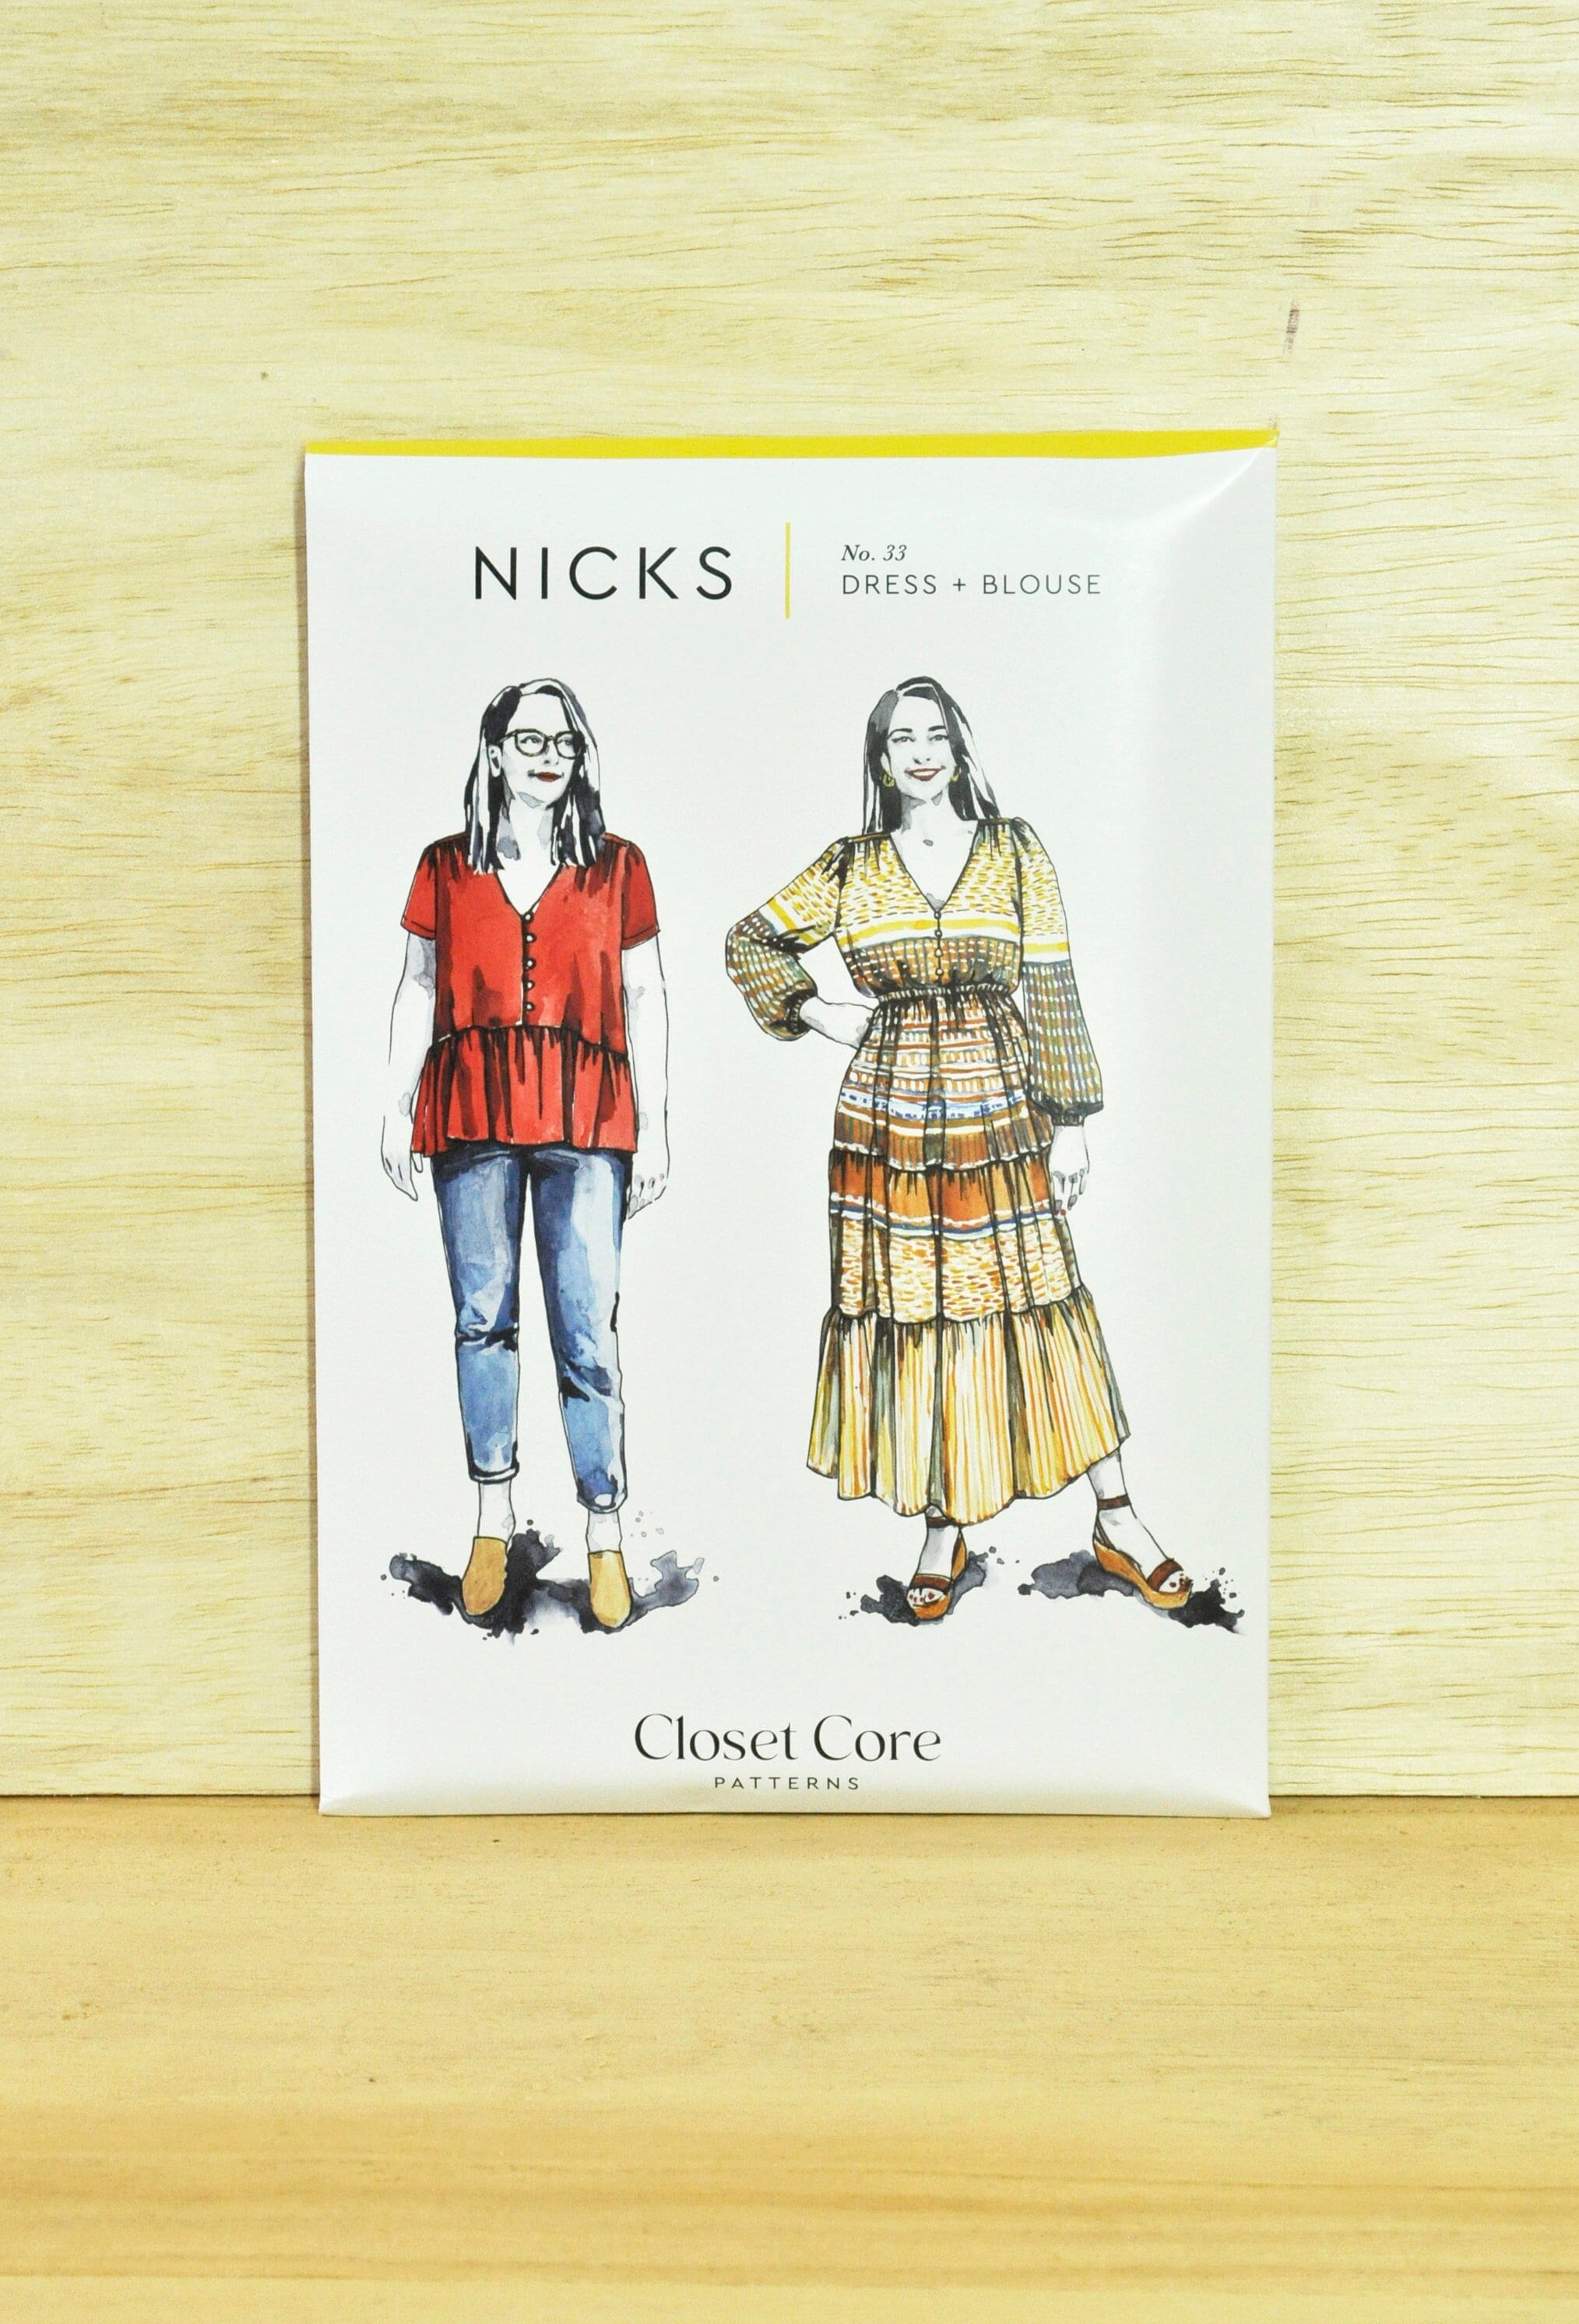 Nicks Dress + Blouse Pattern, Dress Pattern